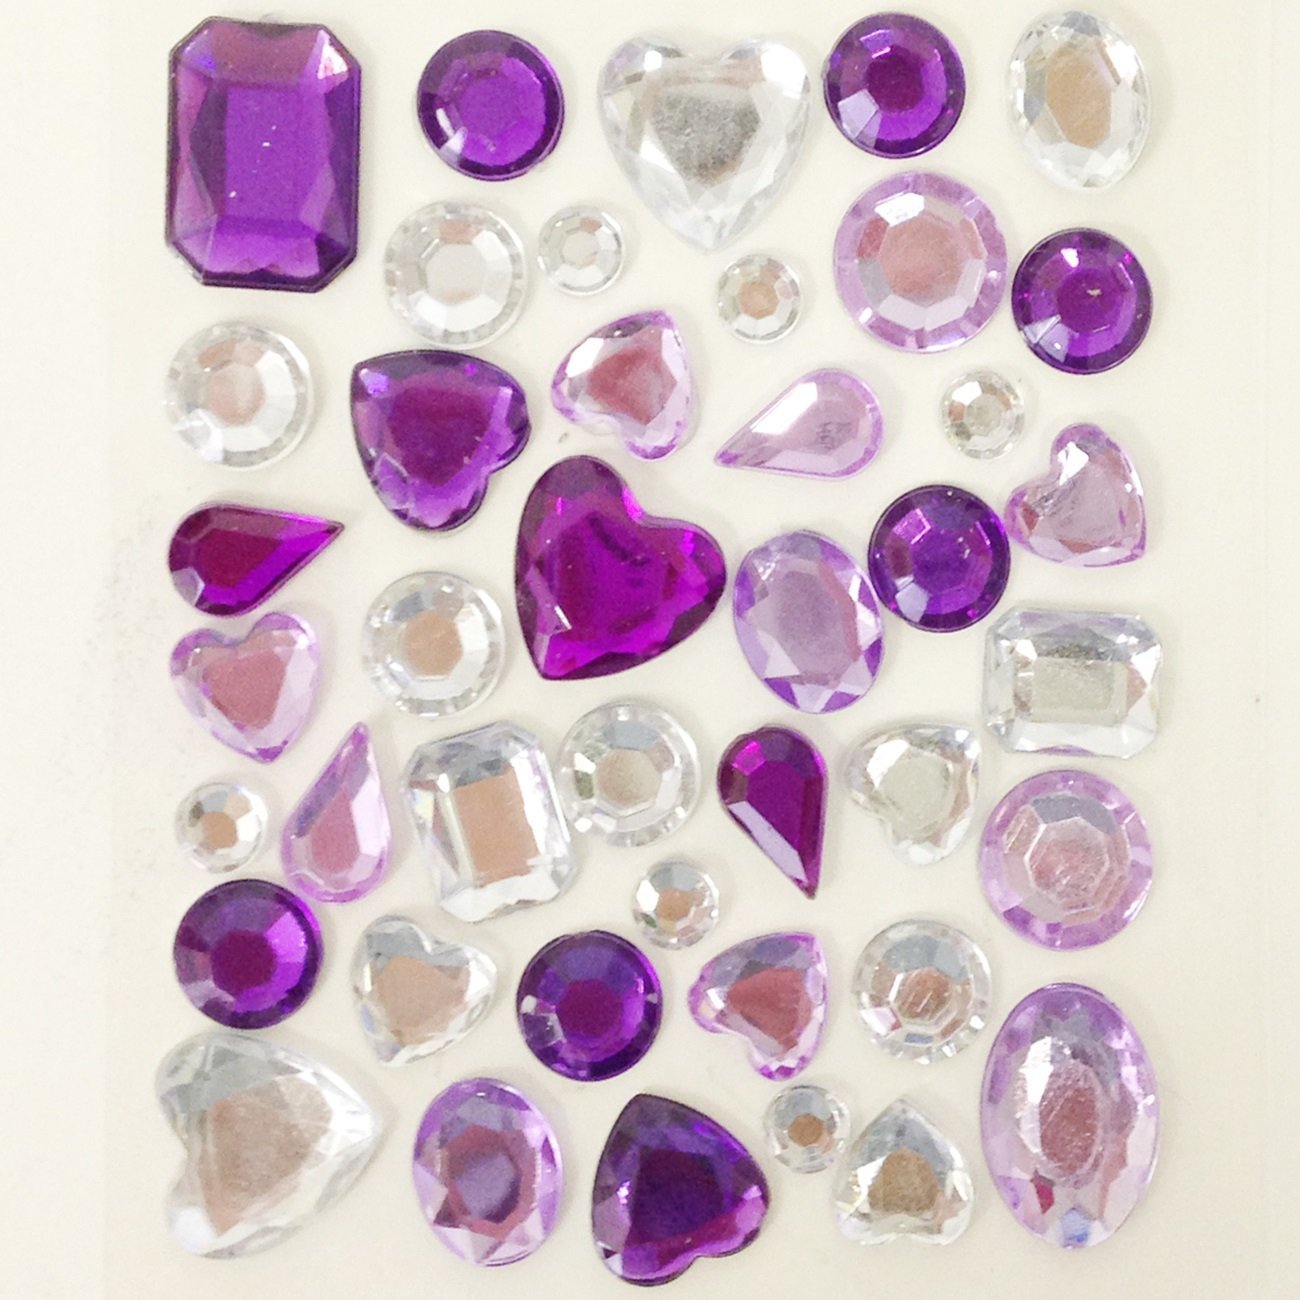 Wrapables Acrylic Self Adhesive Crystal Rhinestone Gem Stickers, Jewel  Multicolor, 1 - Baker's